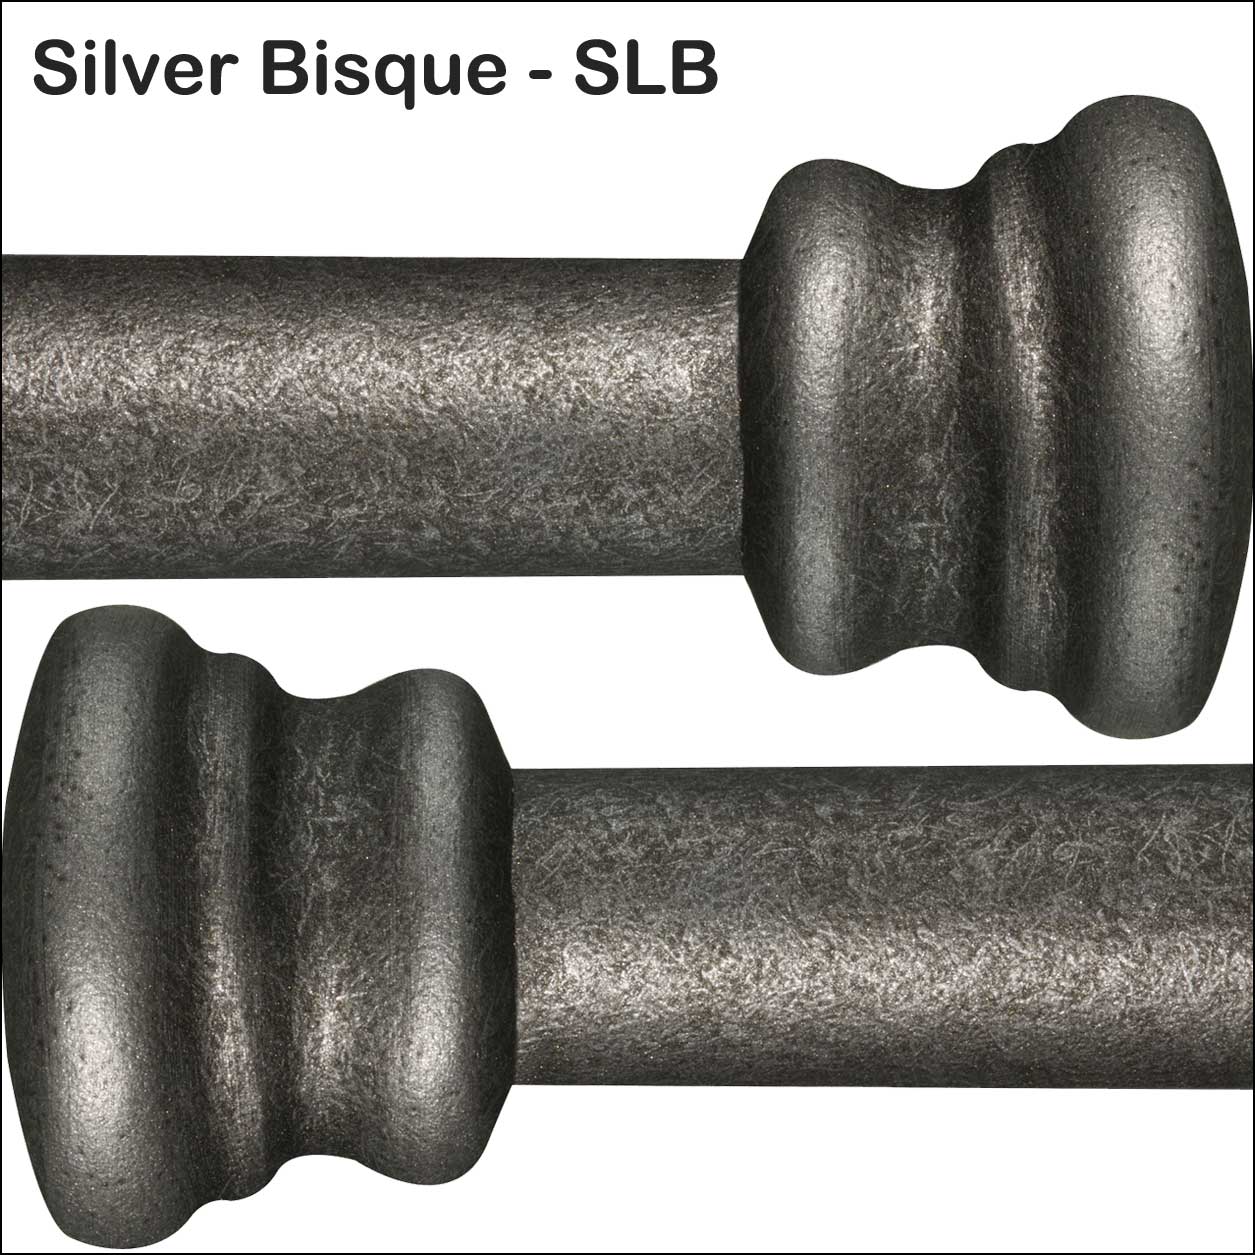 Silver Bisque SLB Powder Coating Finish Wesley Allen Matriae